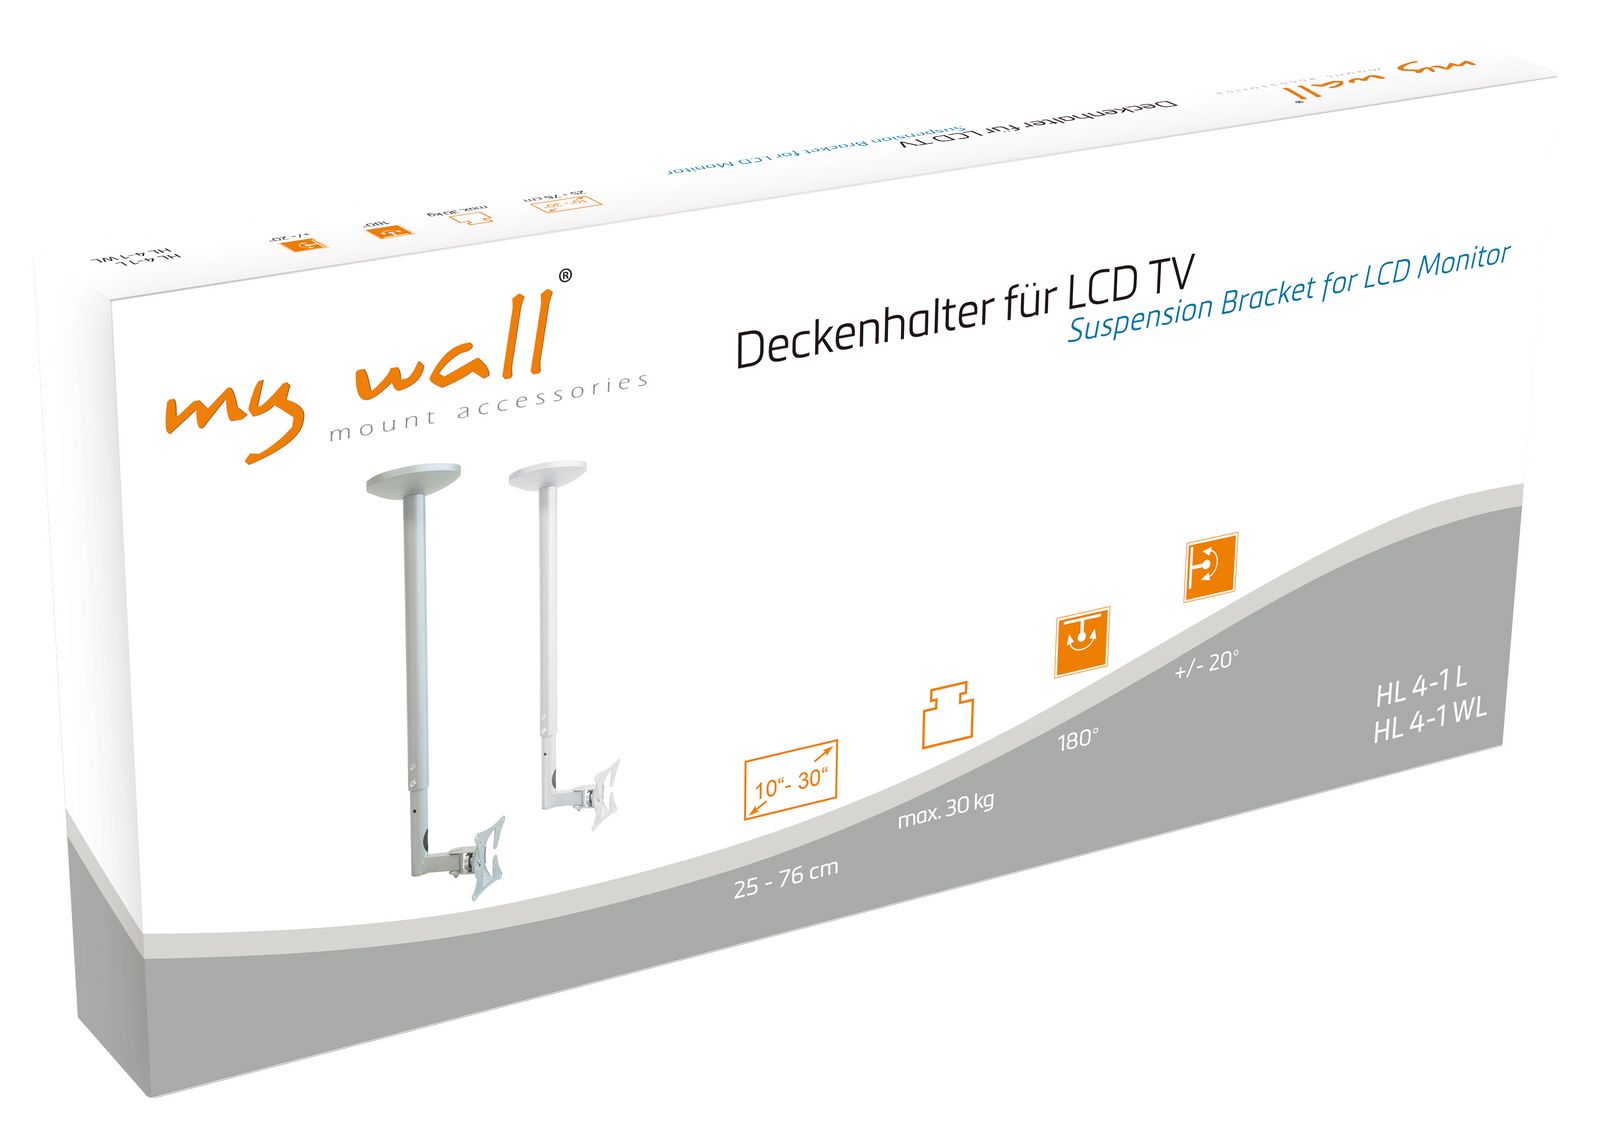 Deckenhalter für LCD TV My Wall HL4-1-/bilder/big/hl4-1_hl4-1wl_karton_72dpi.jpg